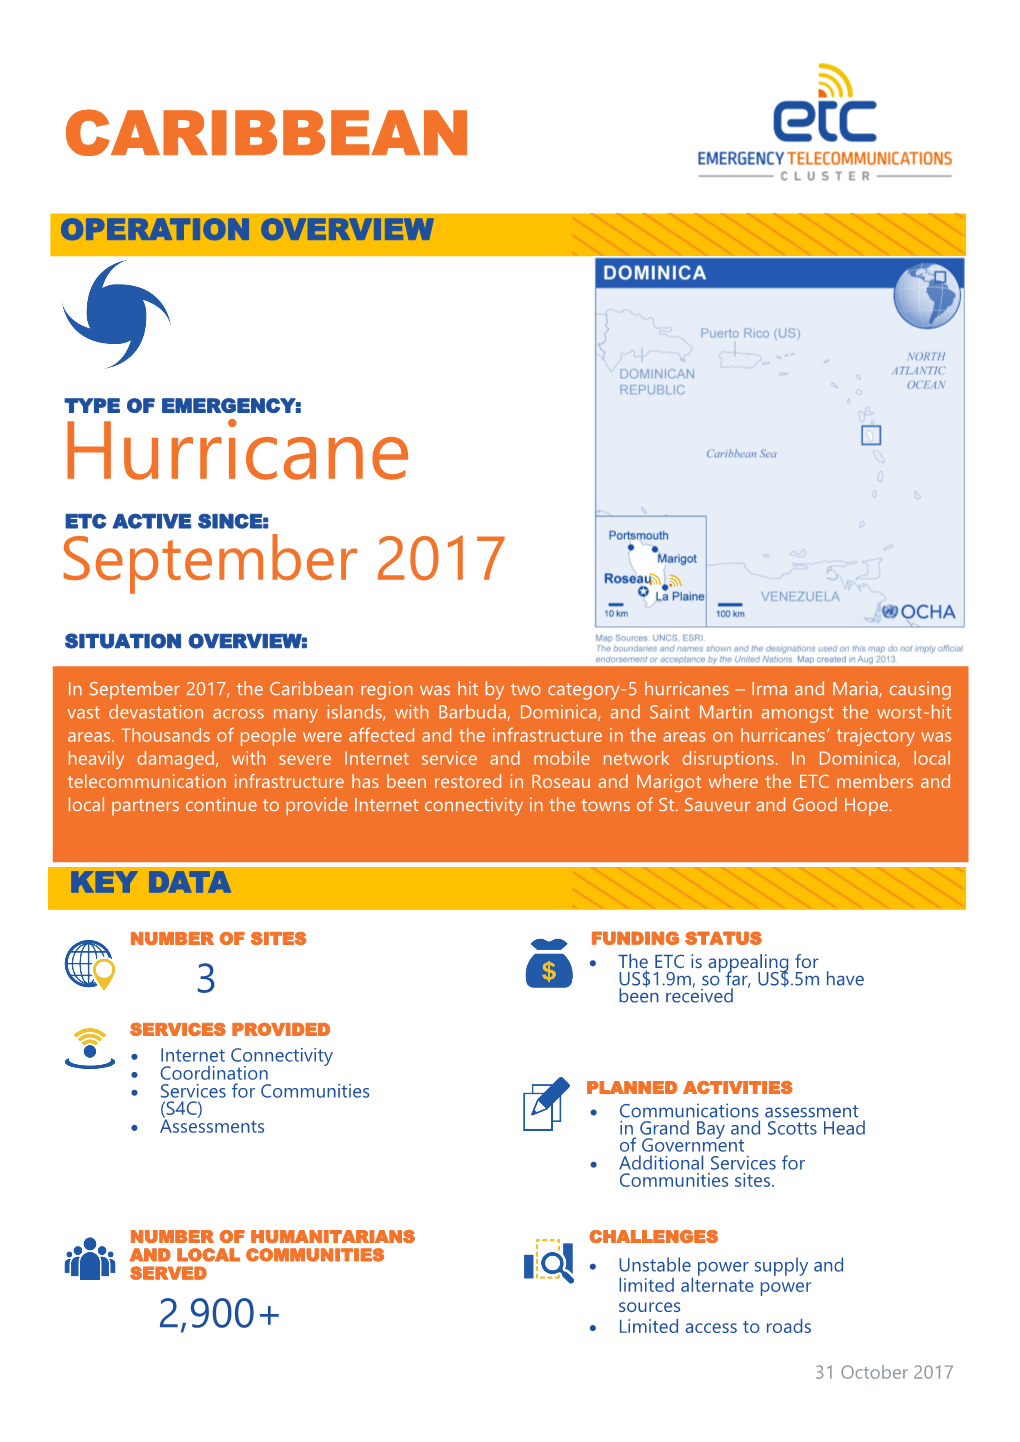 Hurricane ETC ACTIVE SINCE: September 2017